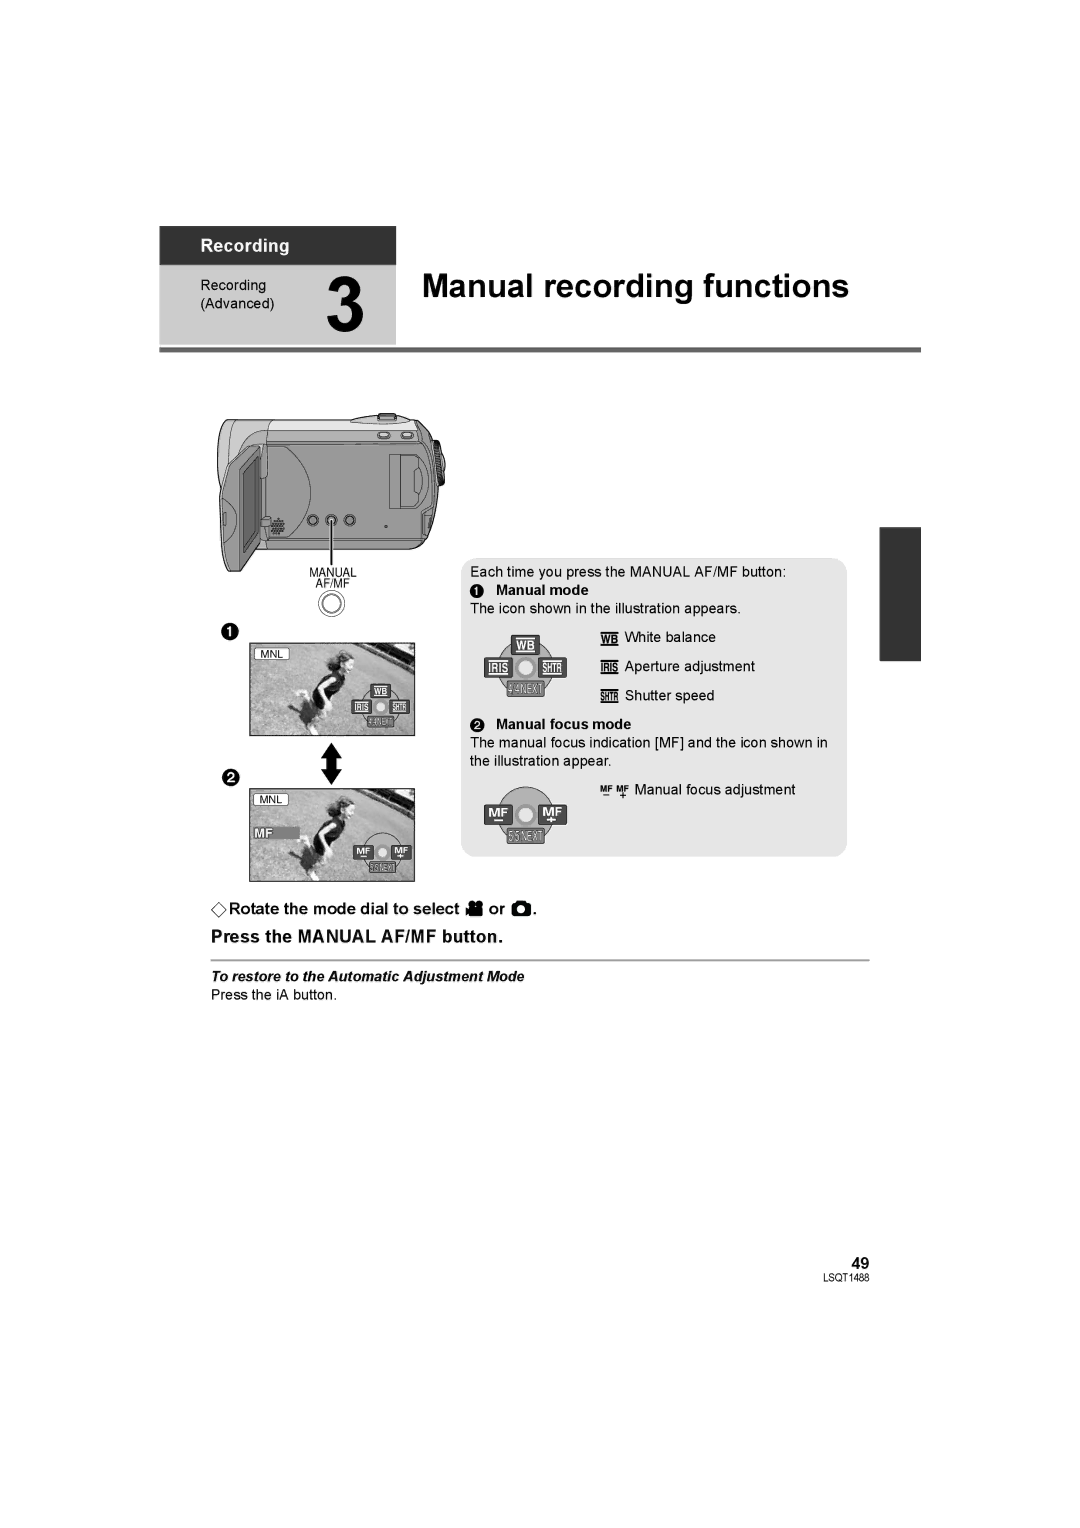 Panasonic SDR-S26PC Manual recording functions, Press the Manual AF/MF button, Manual mode, Manual focus mode 